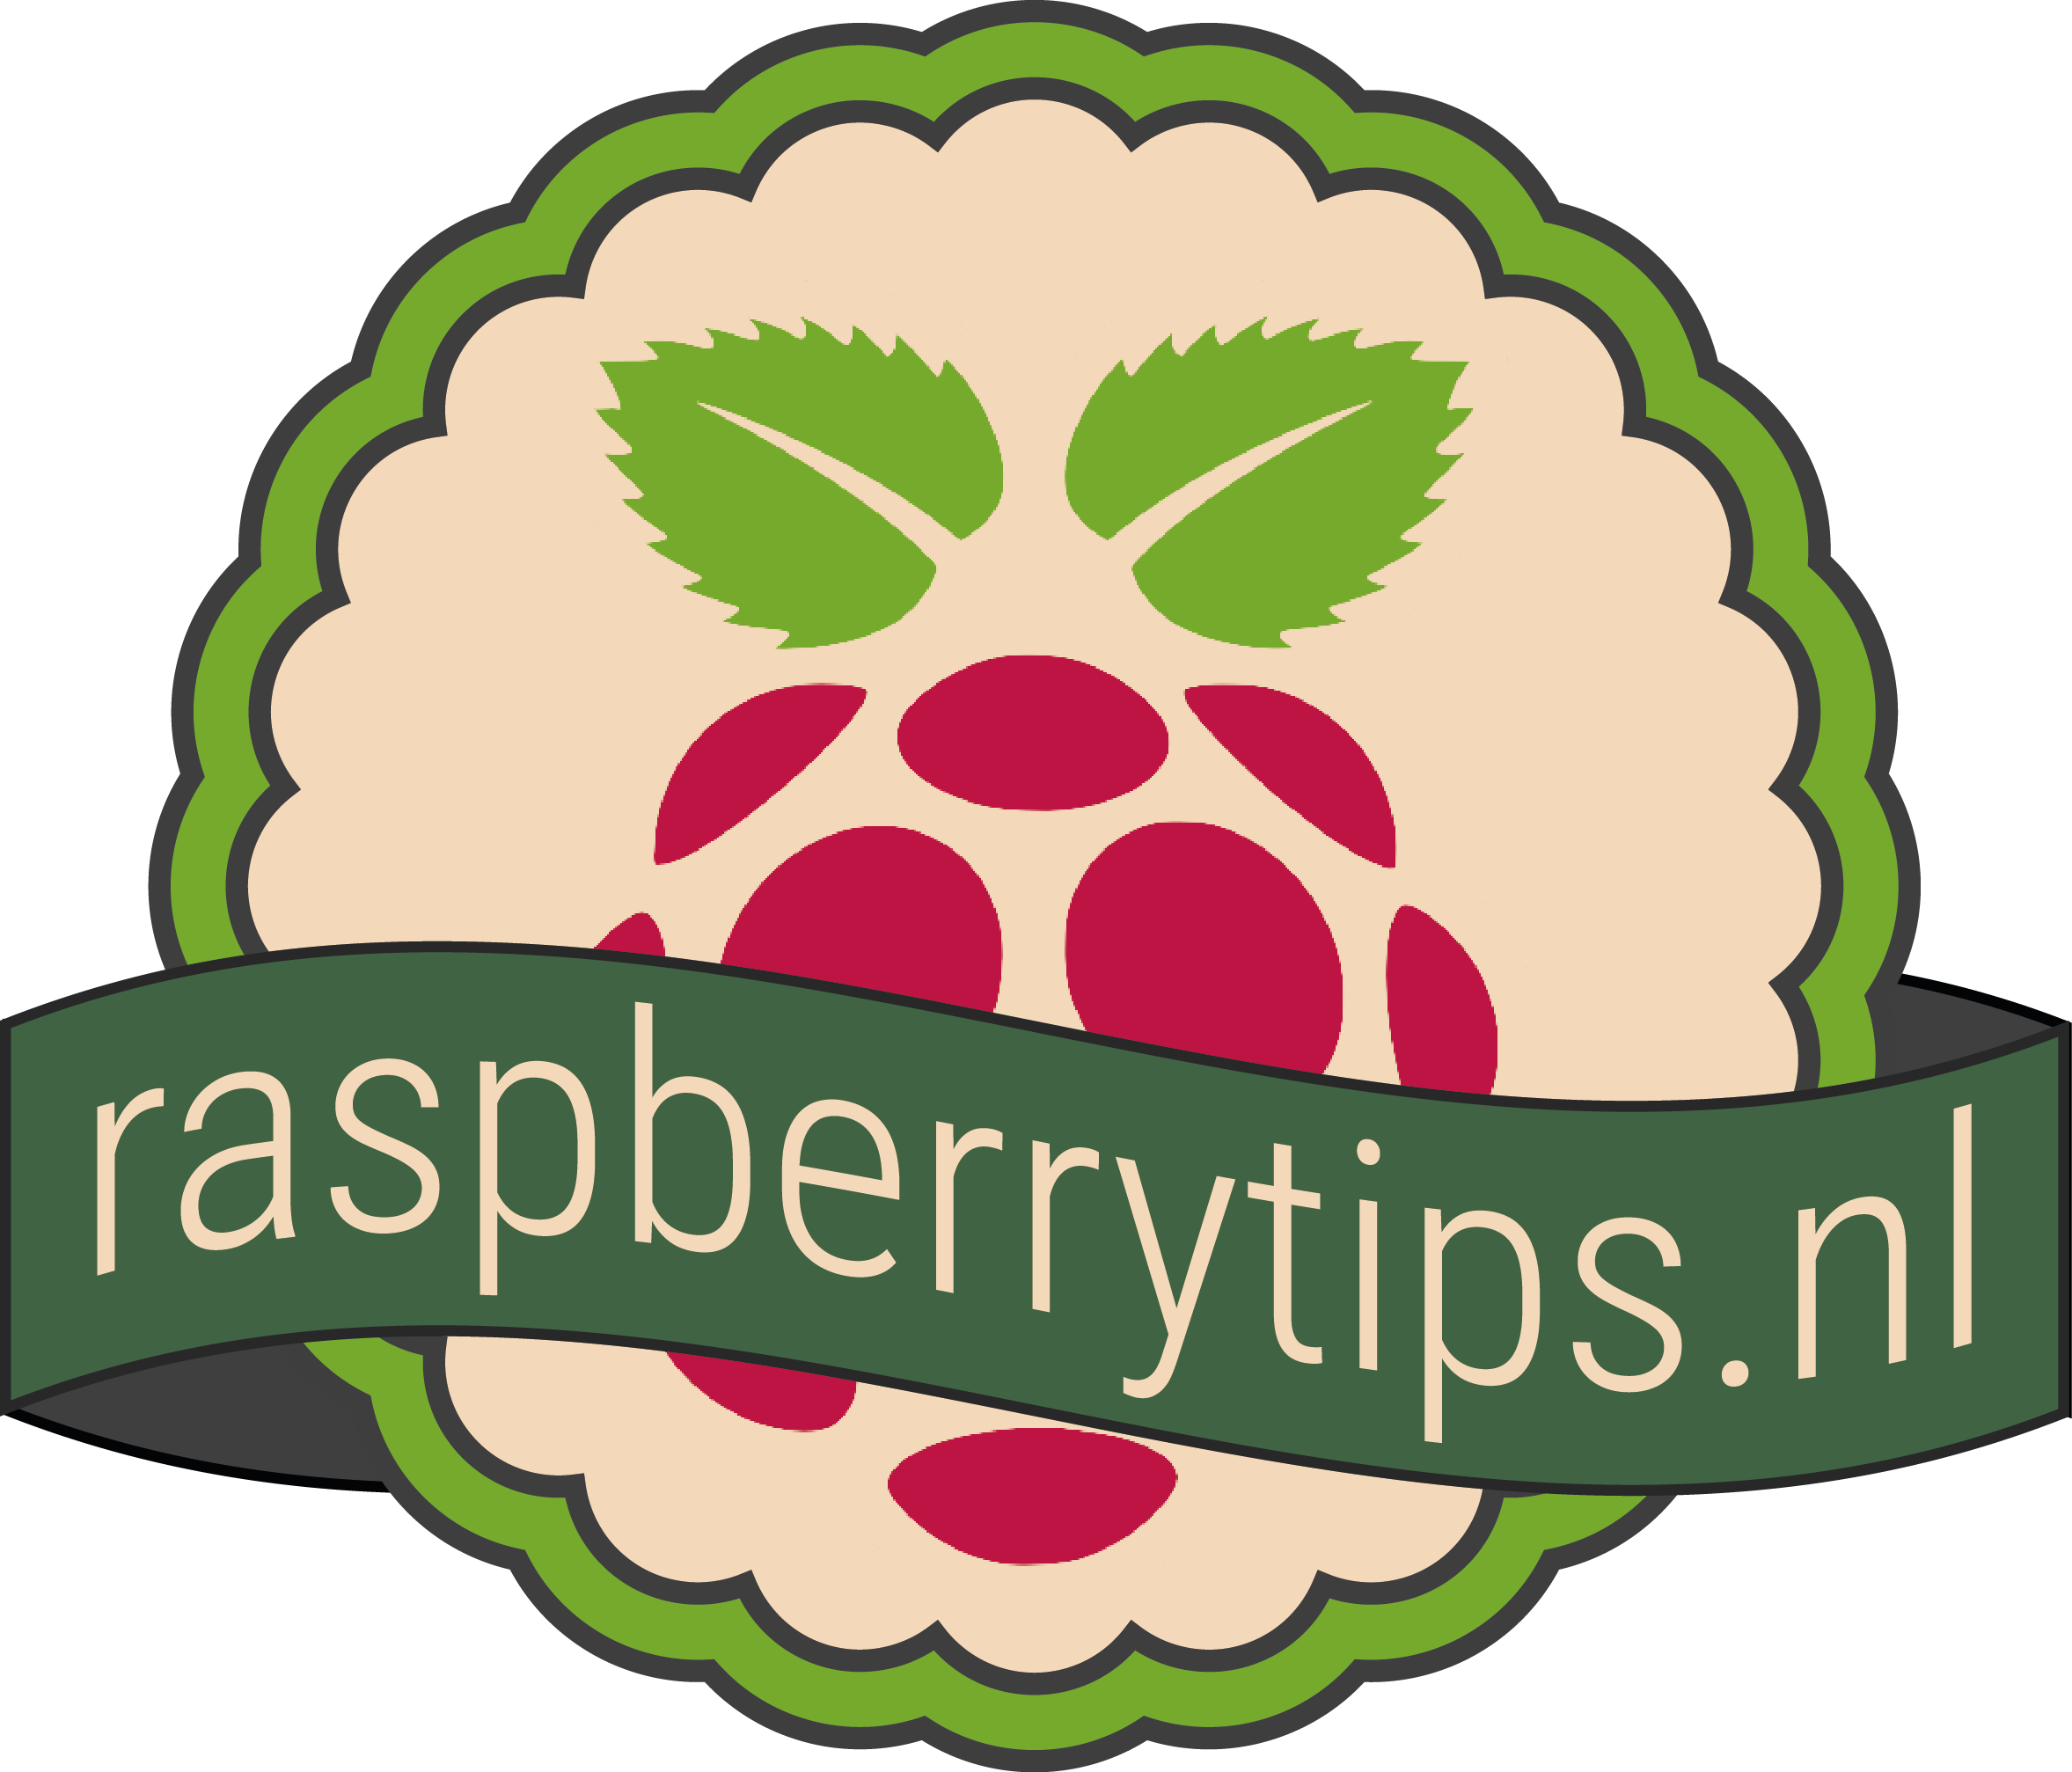 raspberrytips.nl